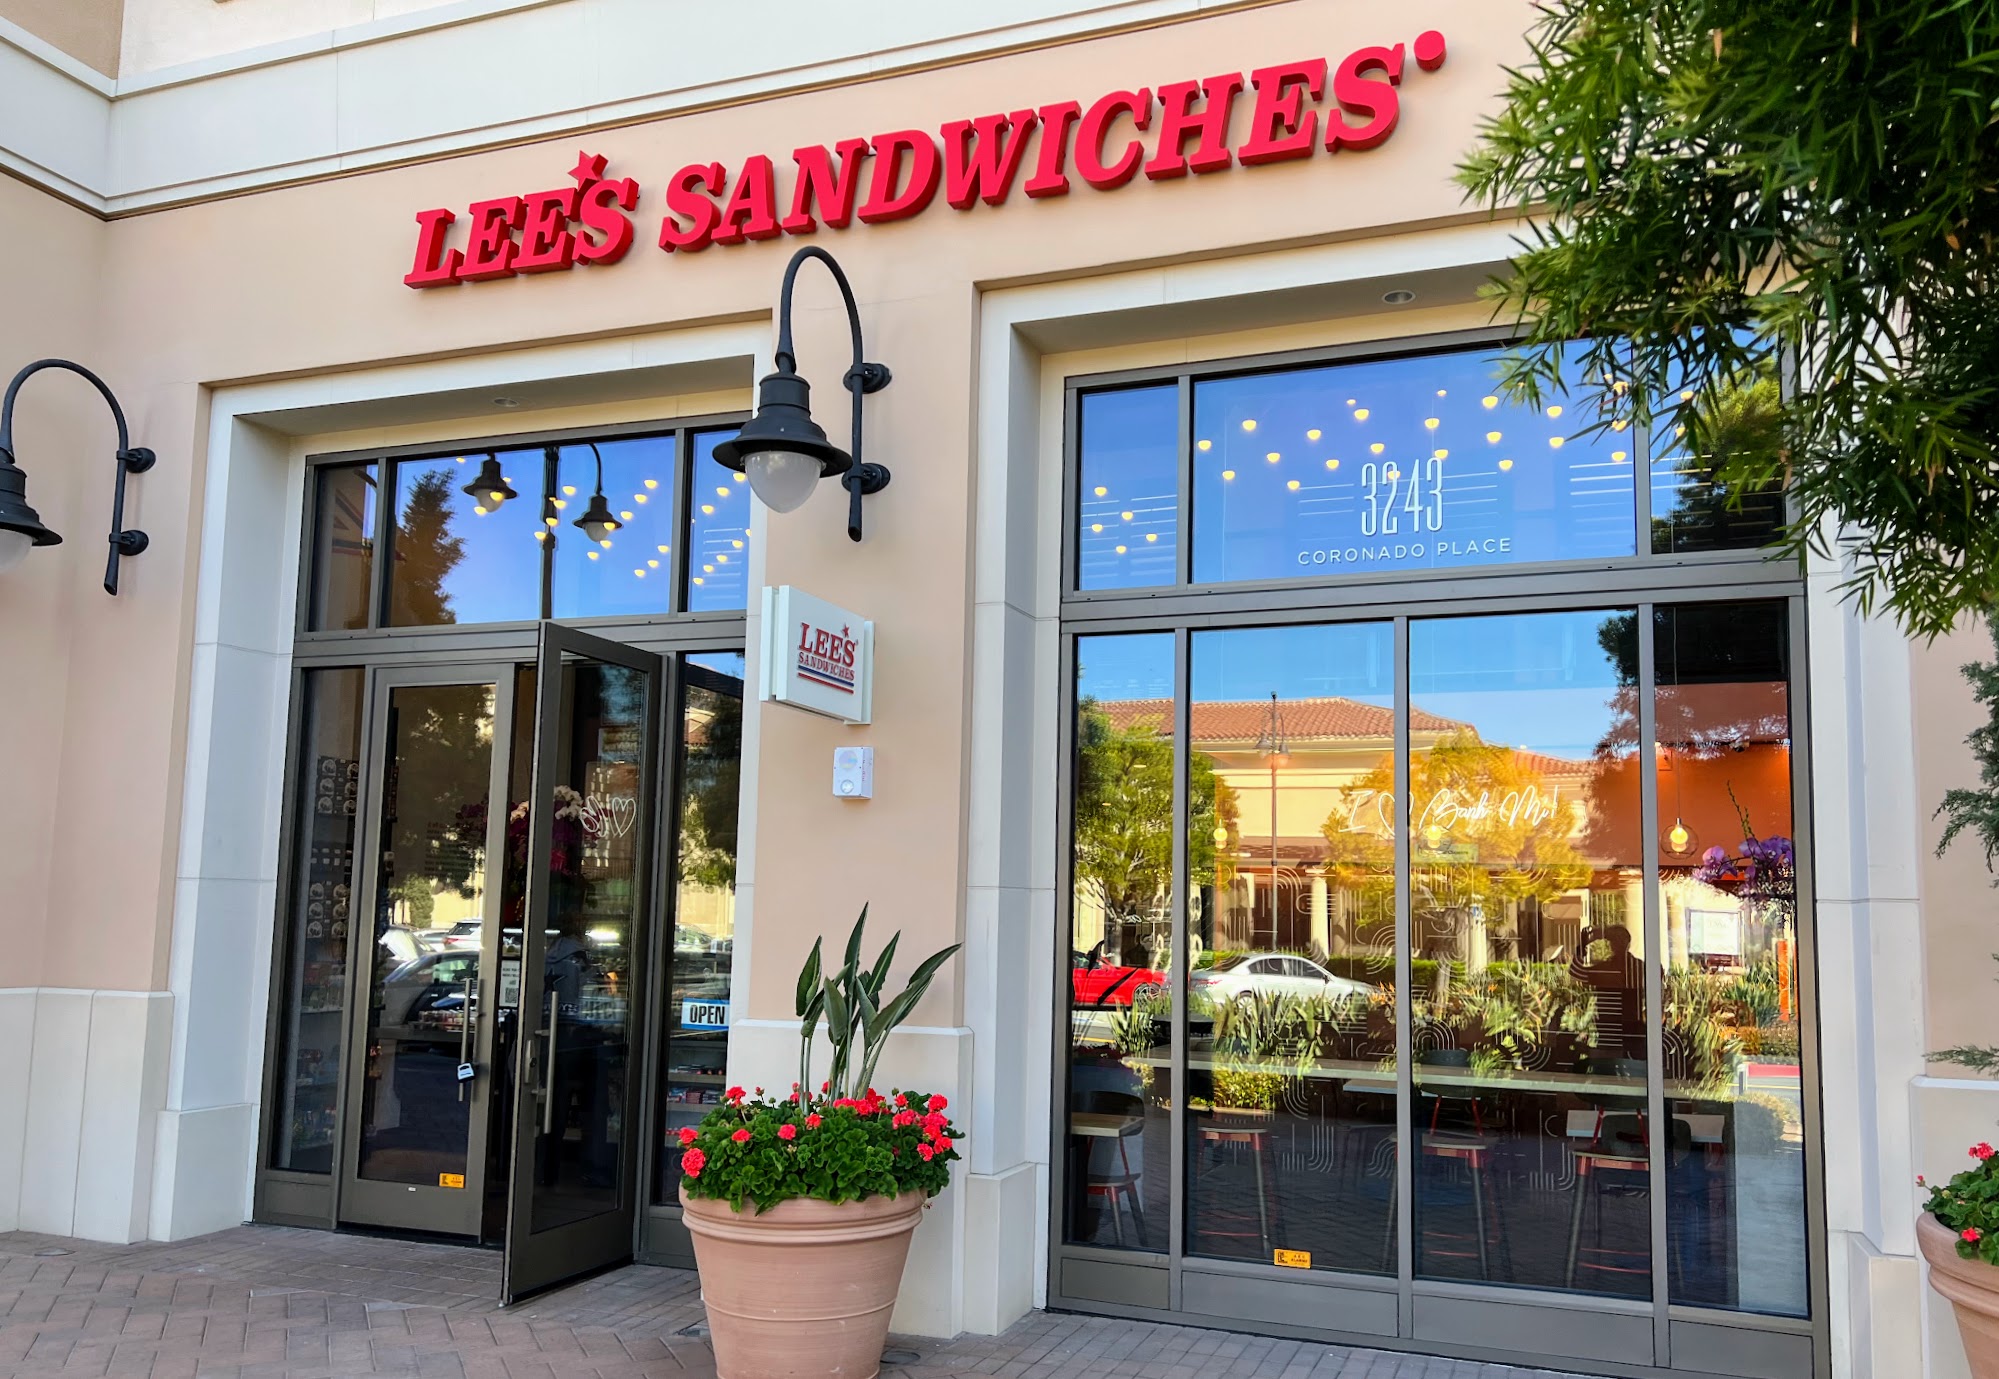 Lee's Sandwiches